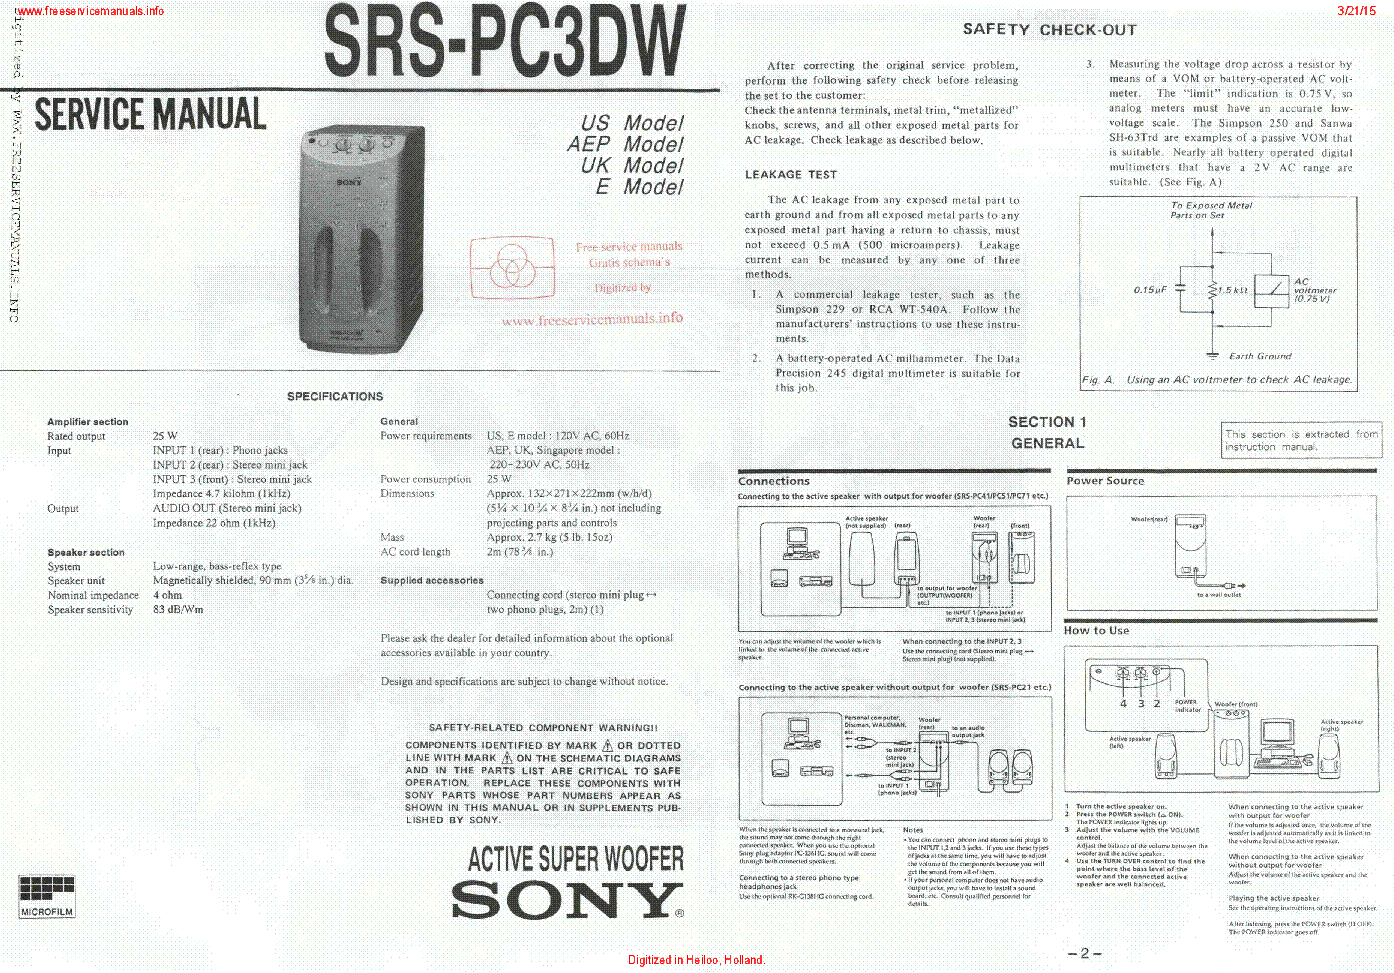 SONY SRS-PC3DW service manual (1st page)